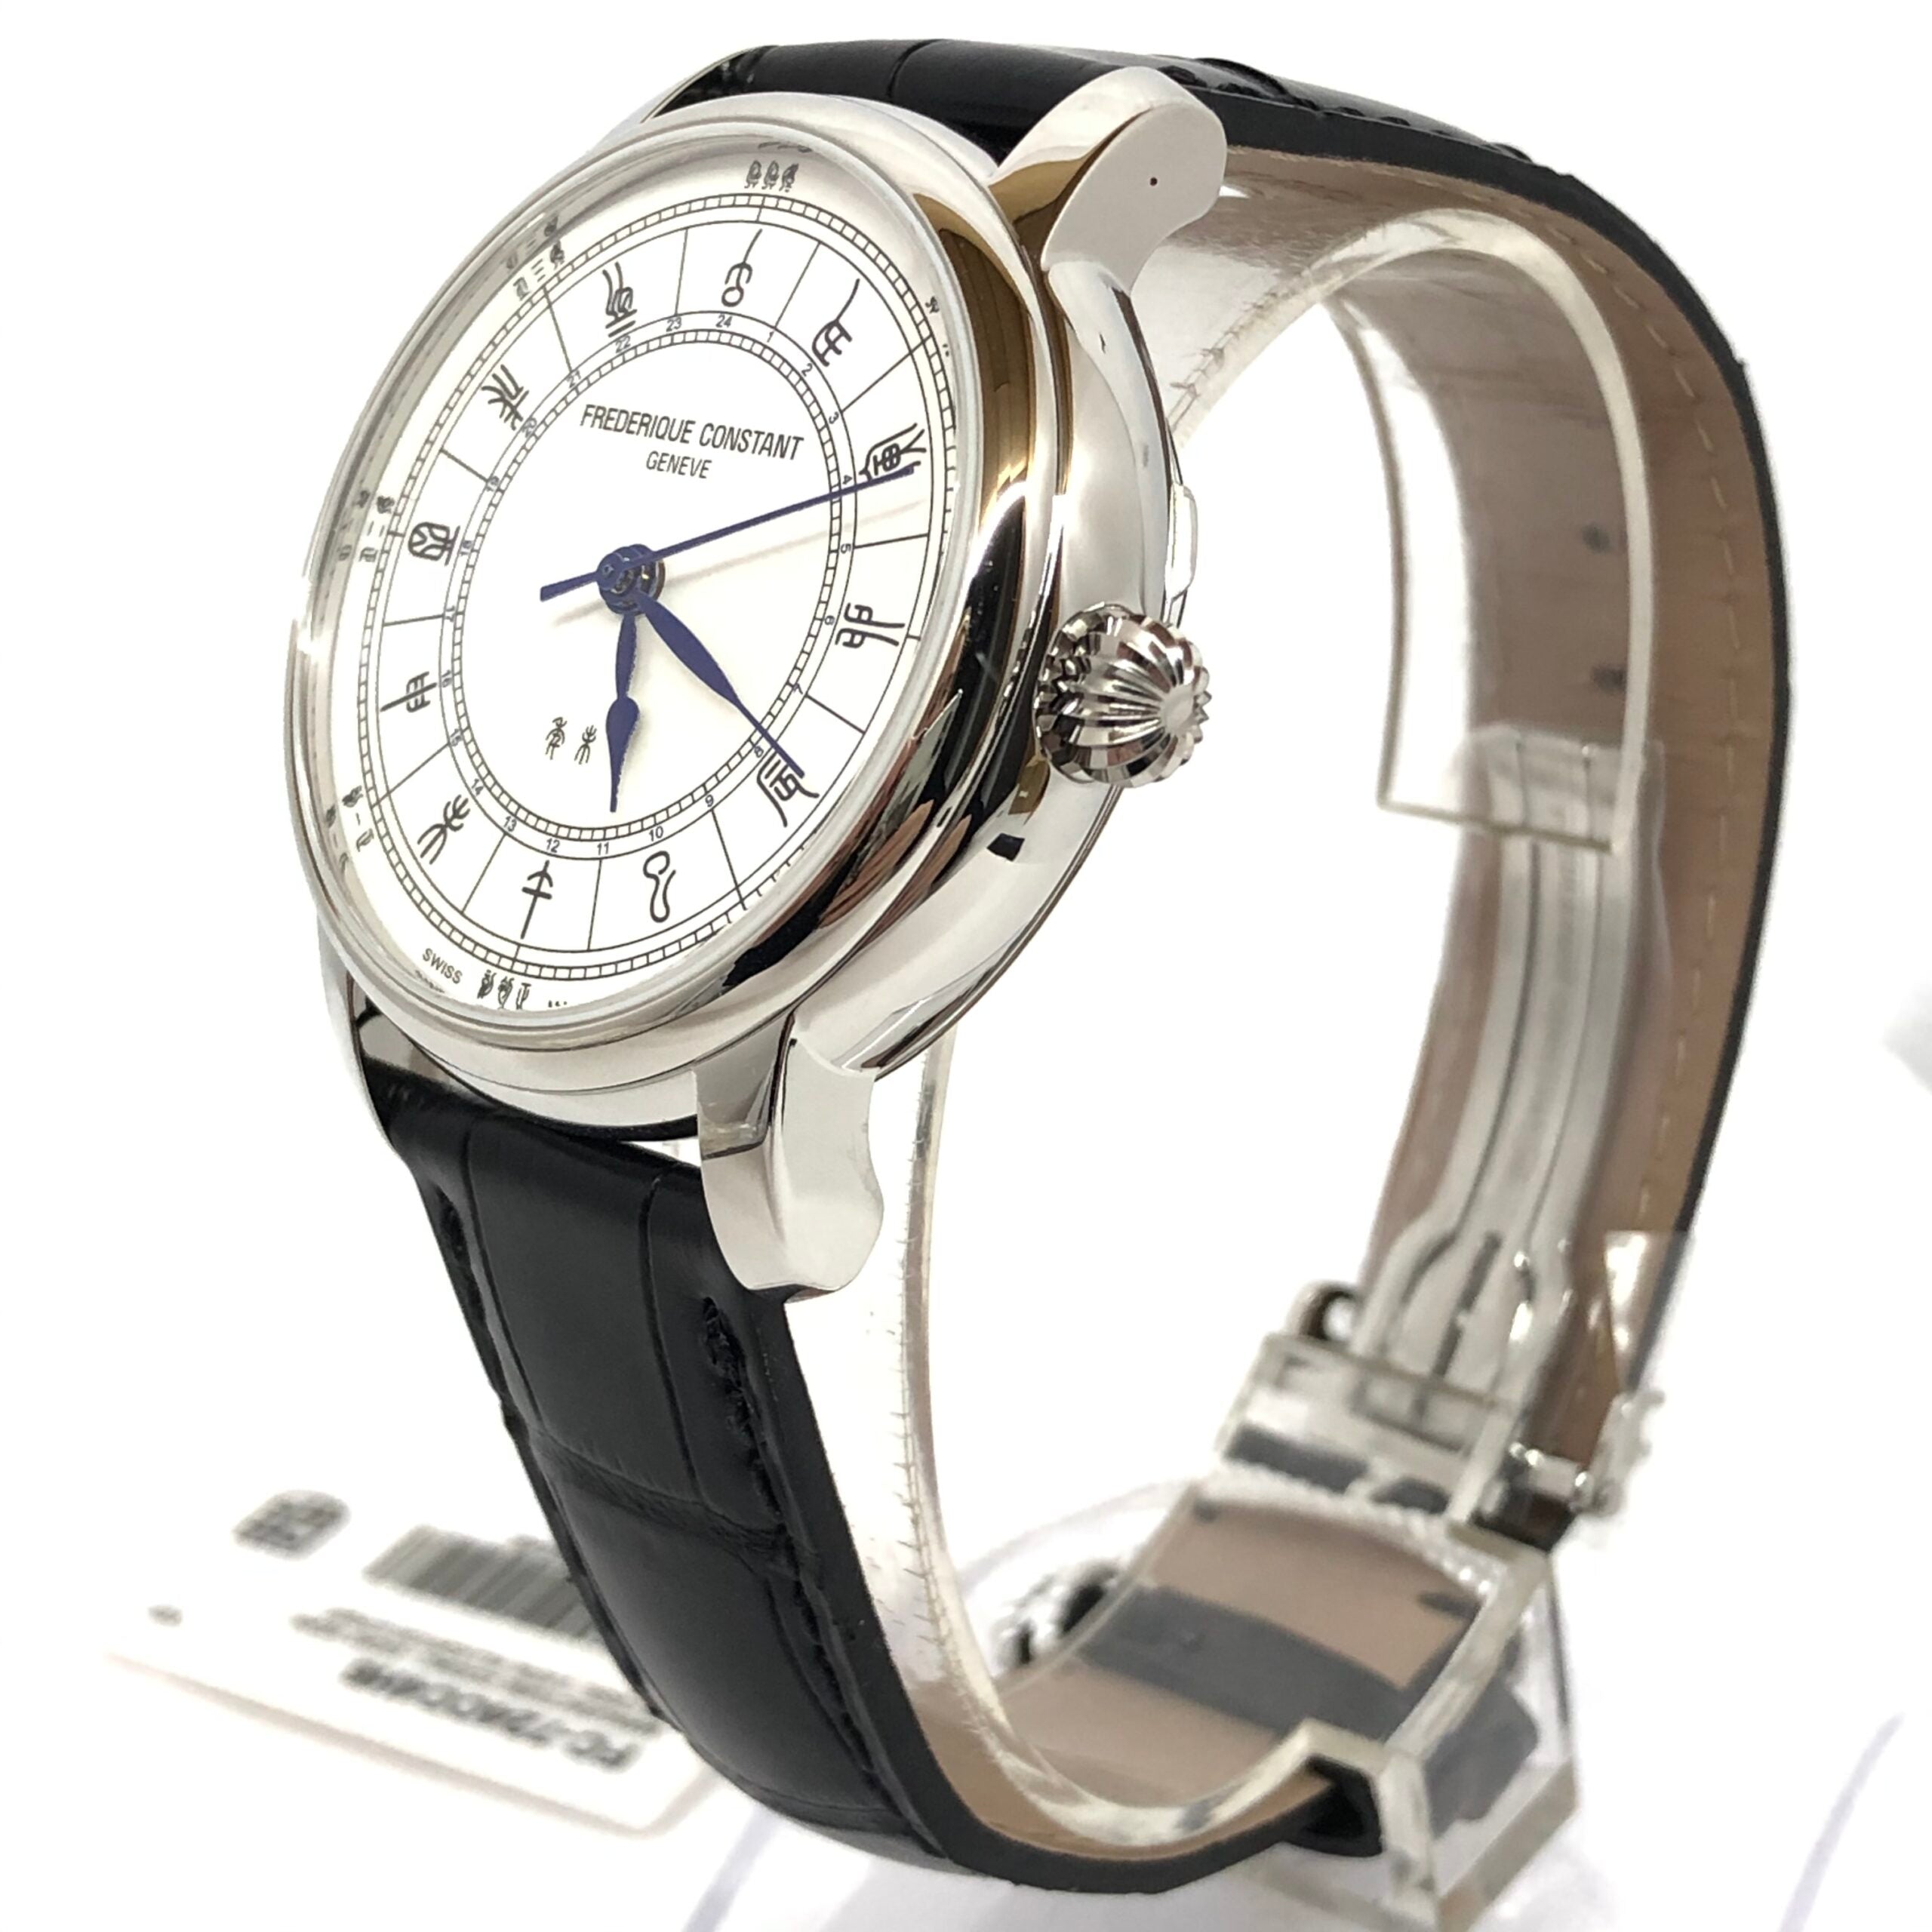 Frederique Constant Manufacture Zodiac Automatic Limited Edition Watch